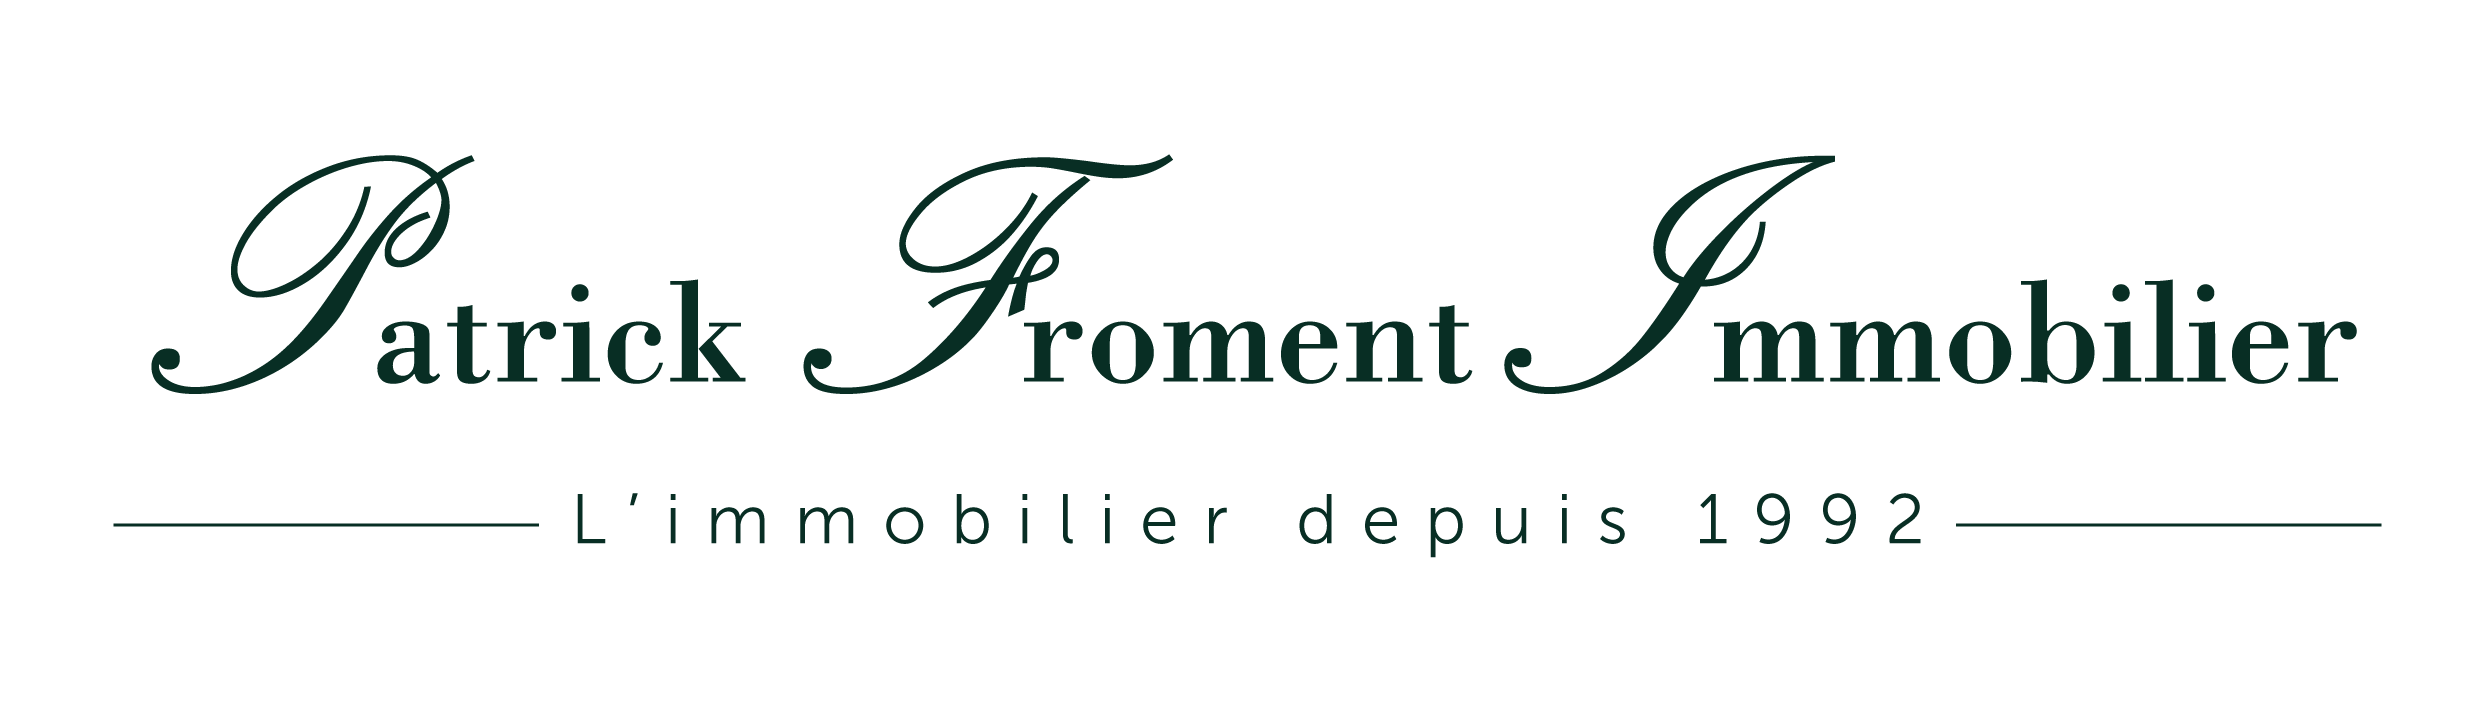 Logo Patrick Froment Immobilier Srl.